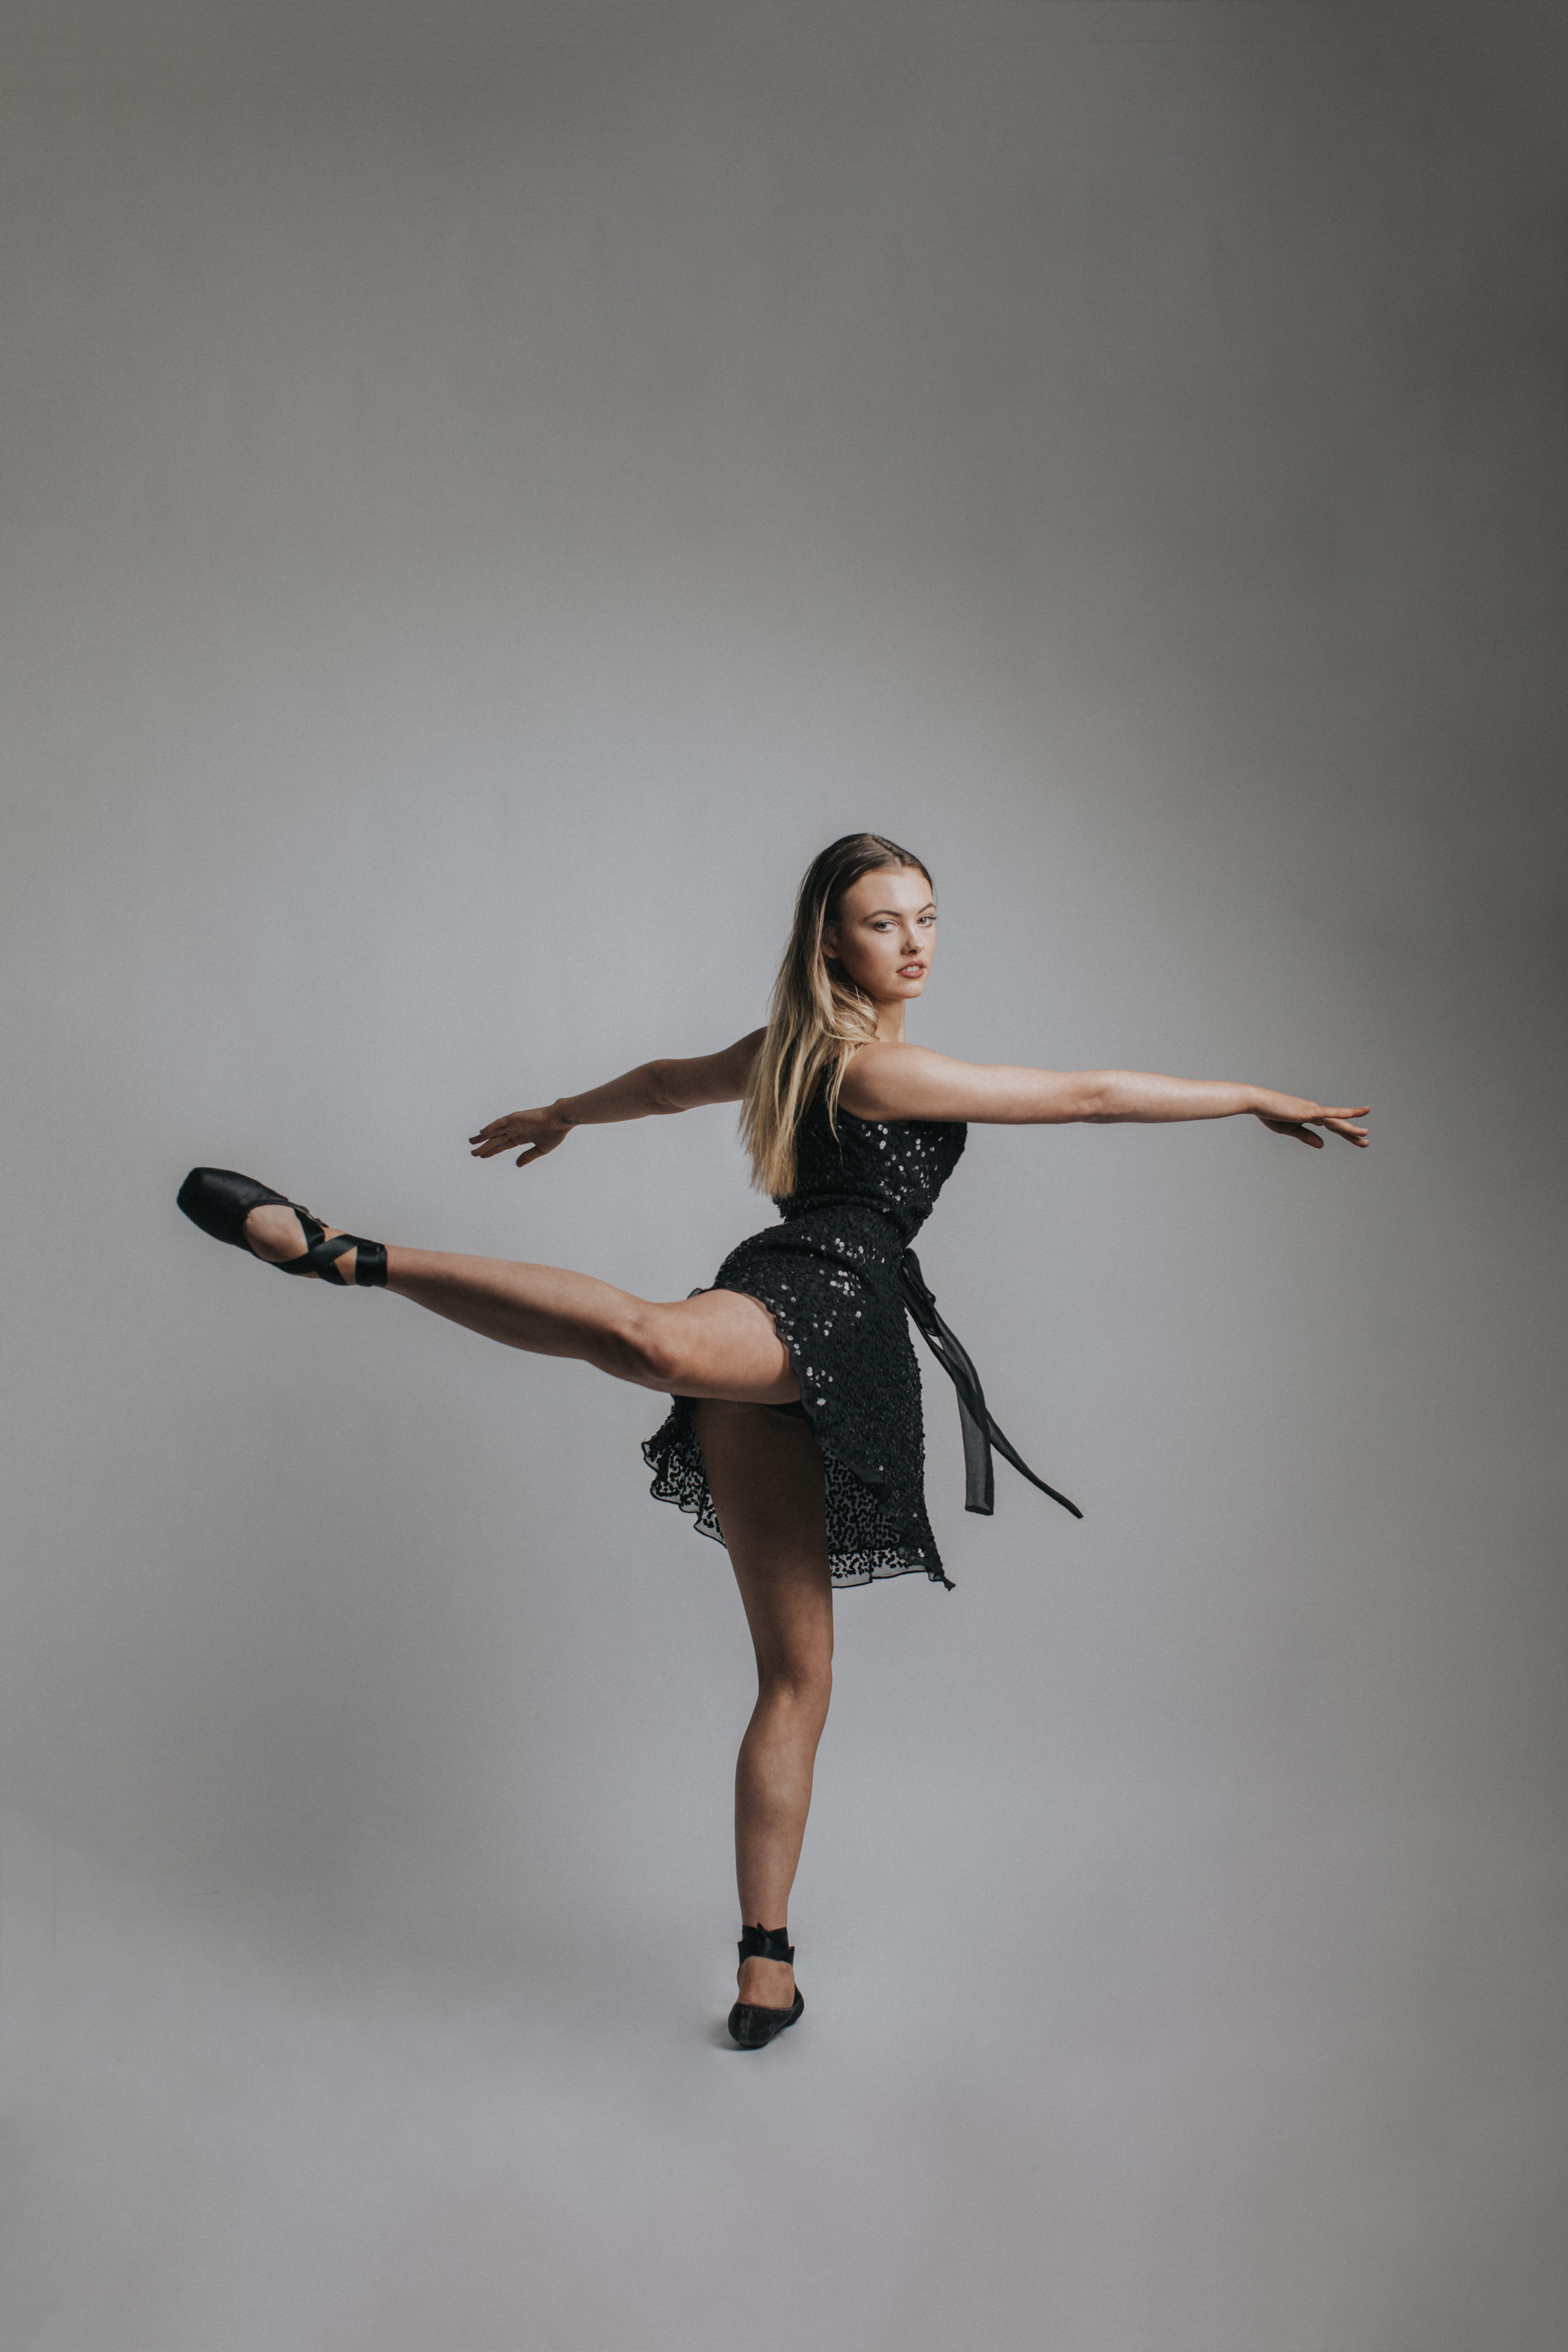 dance photos in melbourne - dance studio photography